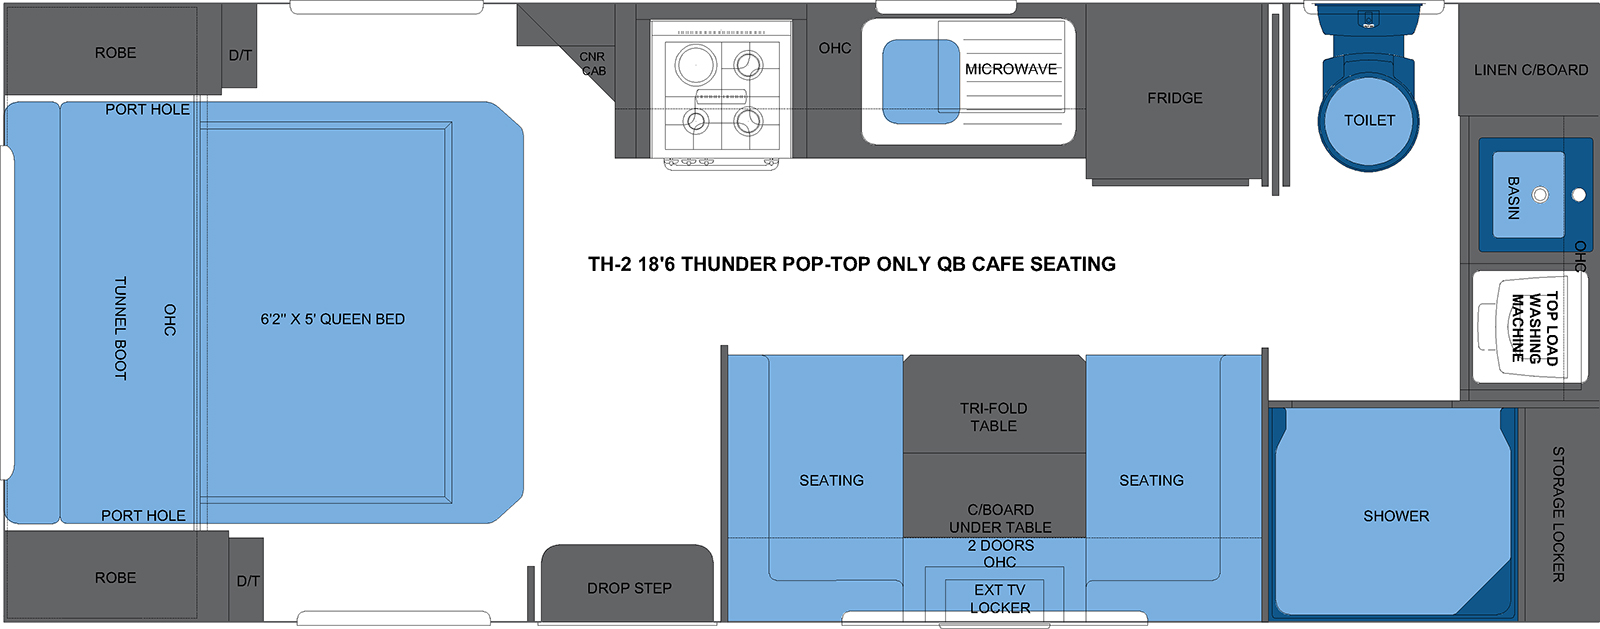 TH-2 18'6 THUNDER POP-TOP QB CAFE SEATING